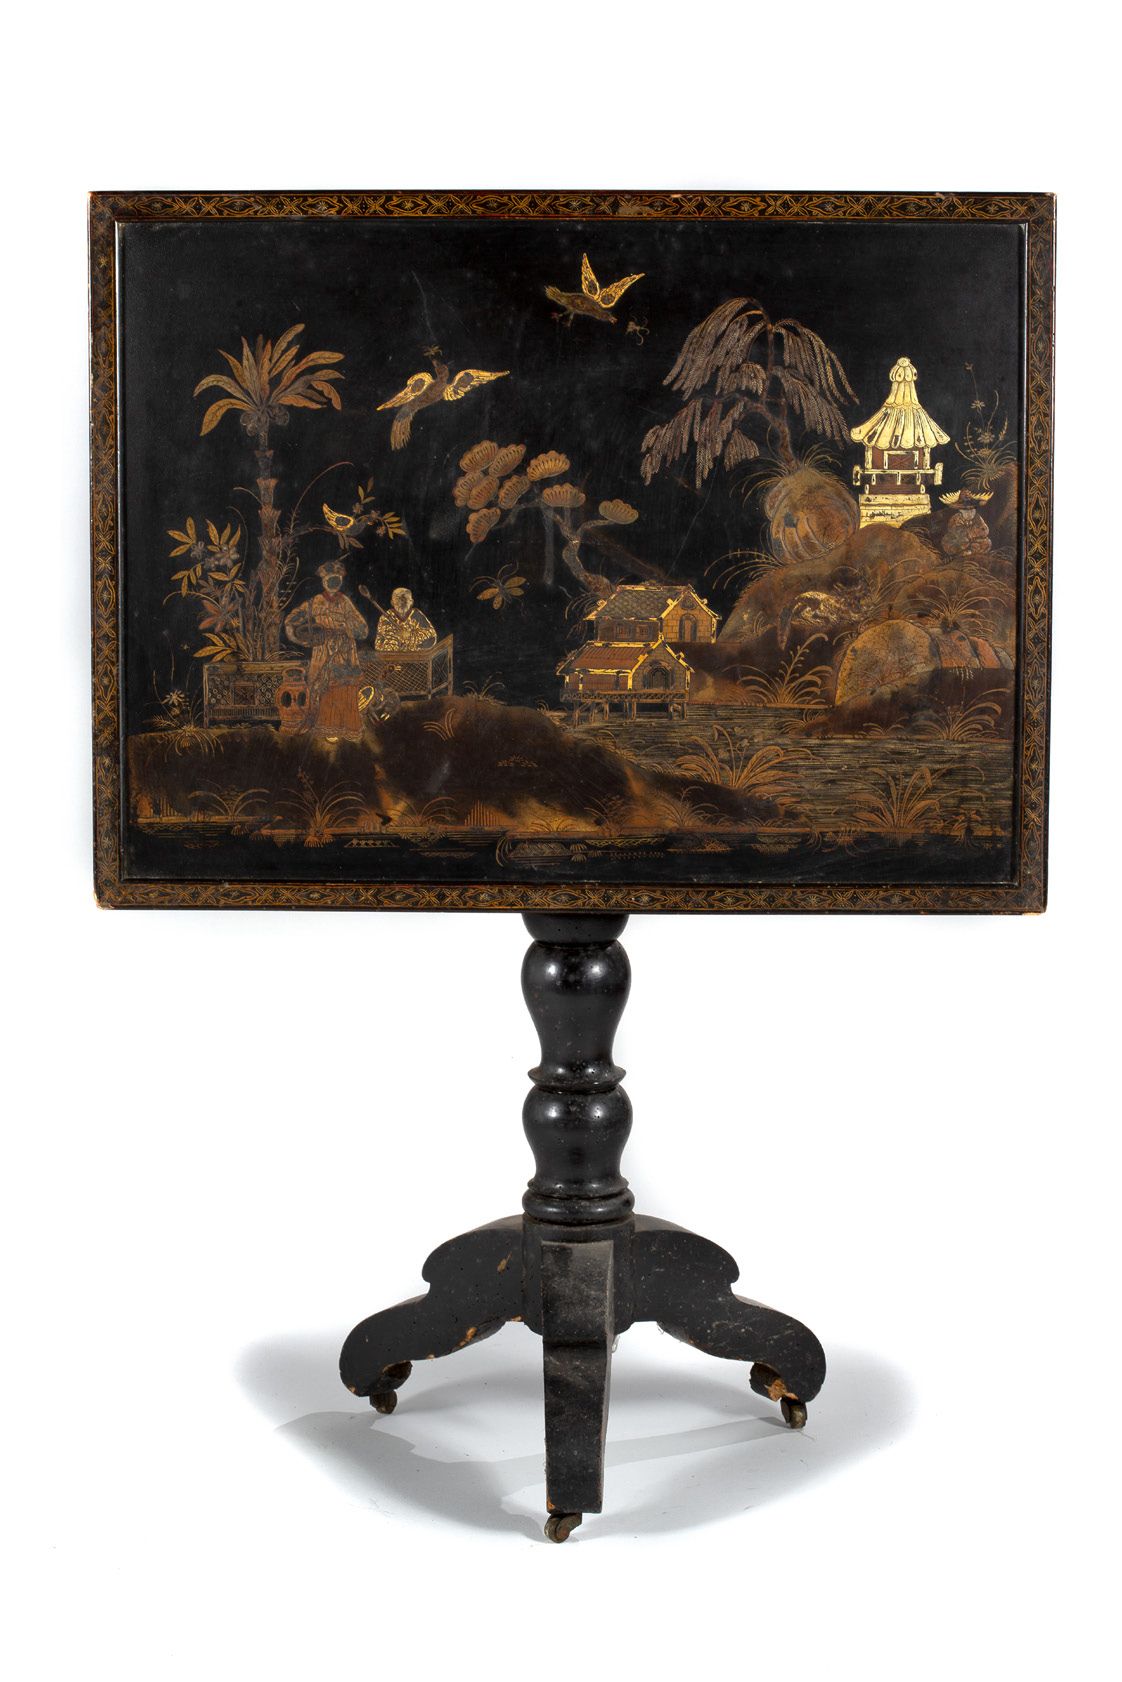 Chine du sud fin XIXe siècle 
Pequeña mesa trípode de madera negra oscura con un&hellip;